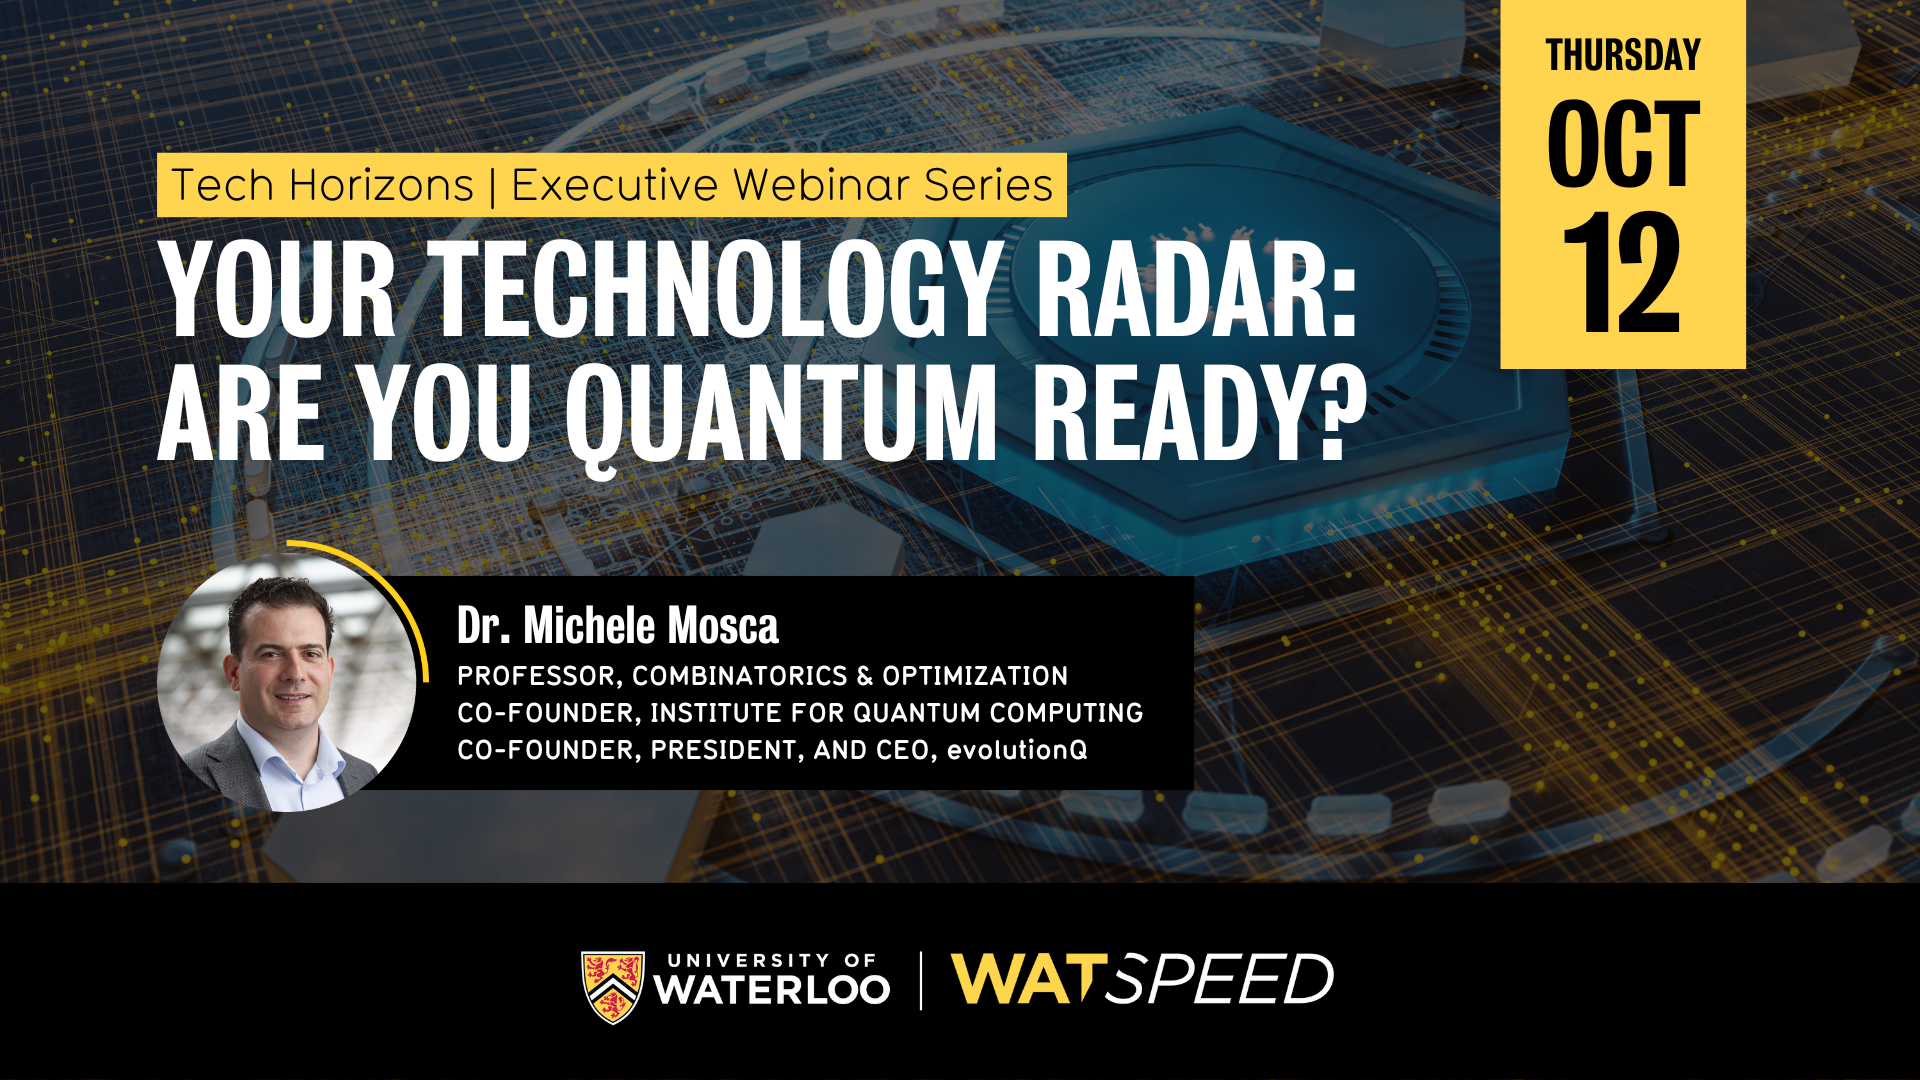 Tech Horizons | Executive Webinar Series - Your Technology Radar: Are You Quantum Ready?